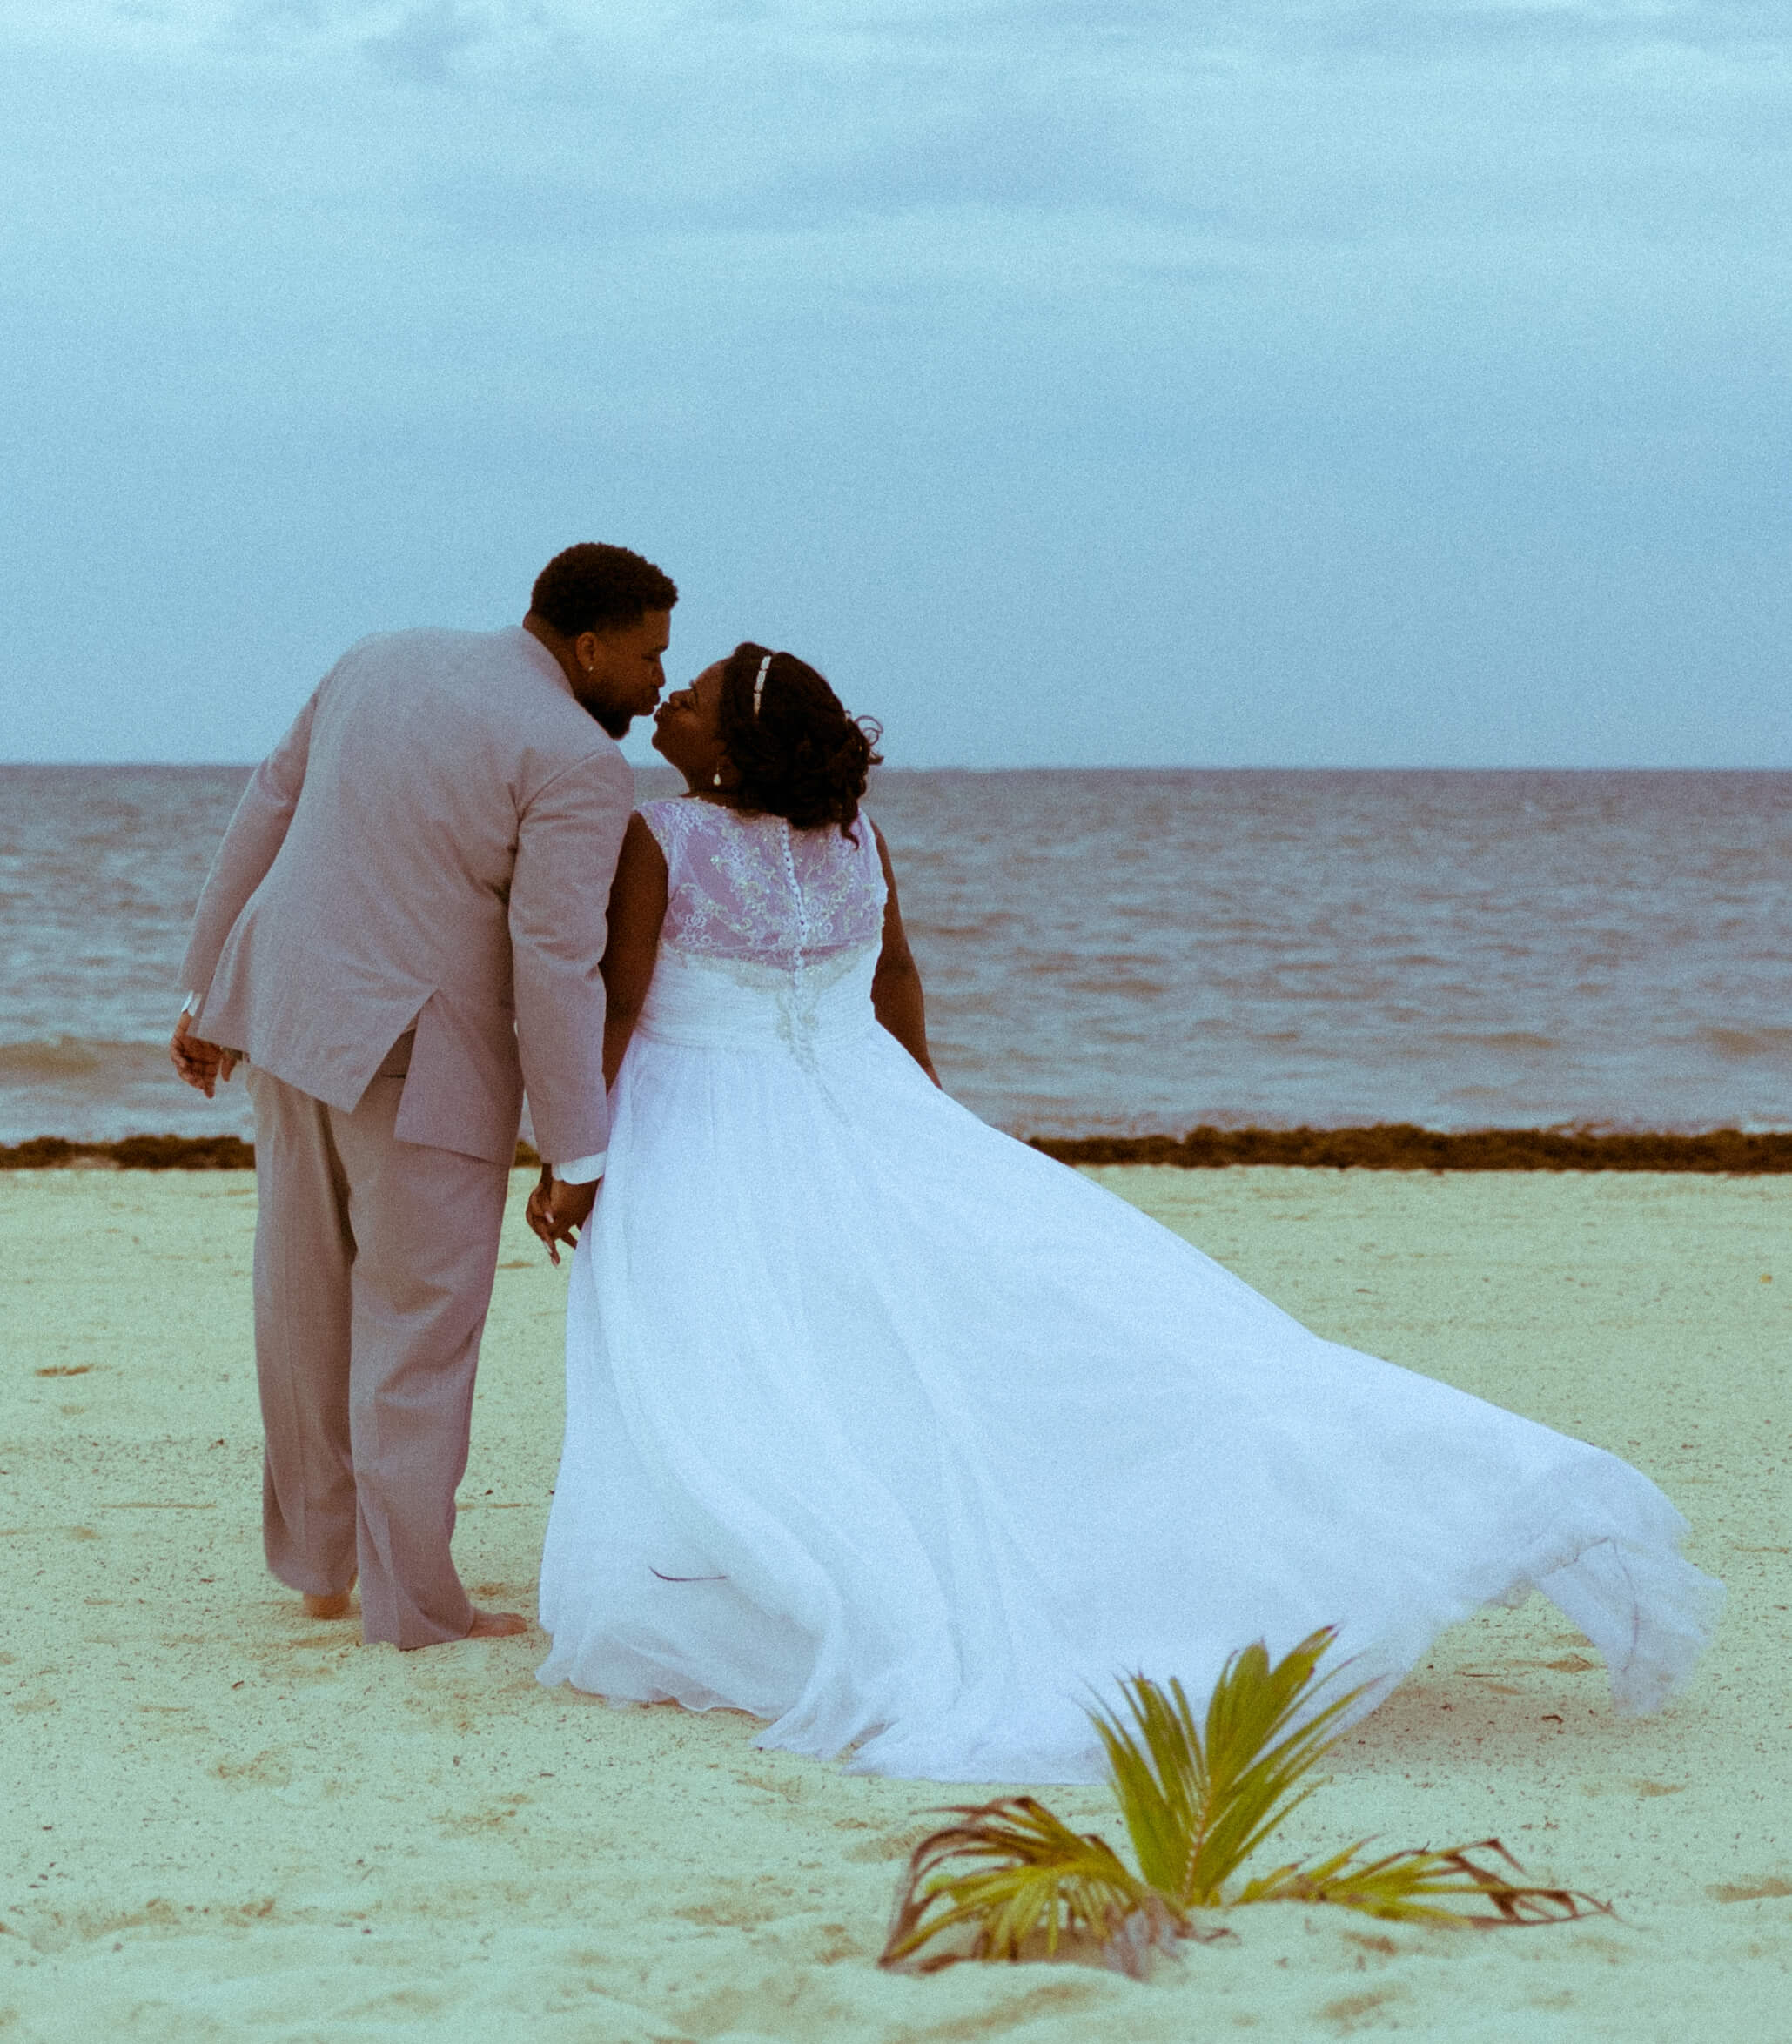 tressa-how-to-plan-a-destination-wedding-in-cancun-mexico-moon-palace-resort-black-destination-bride-destiland-desti-guide-to-destination-weddings-beach-wedding-kiss.jpg